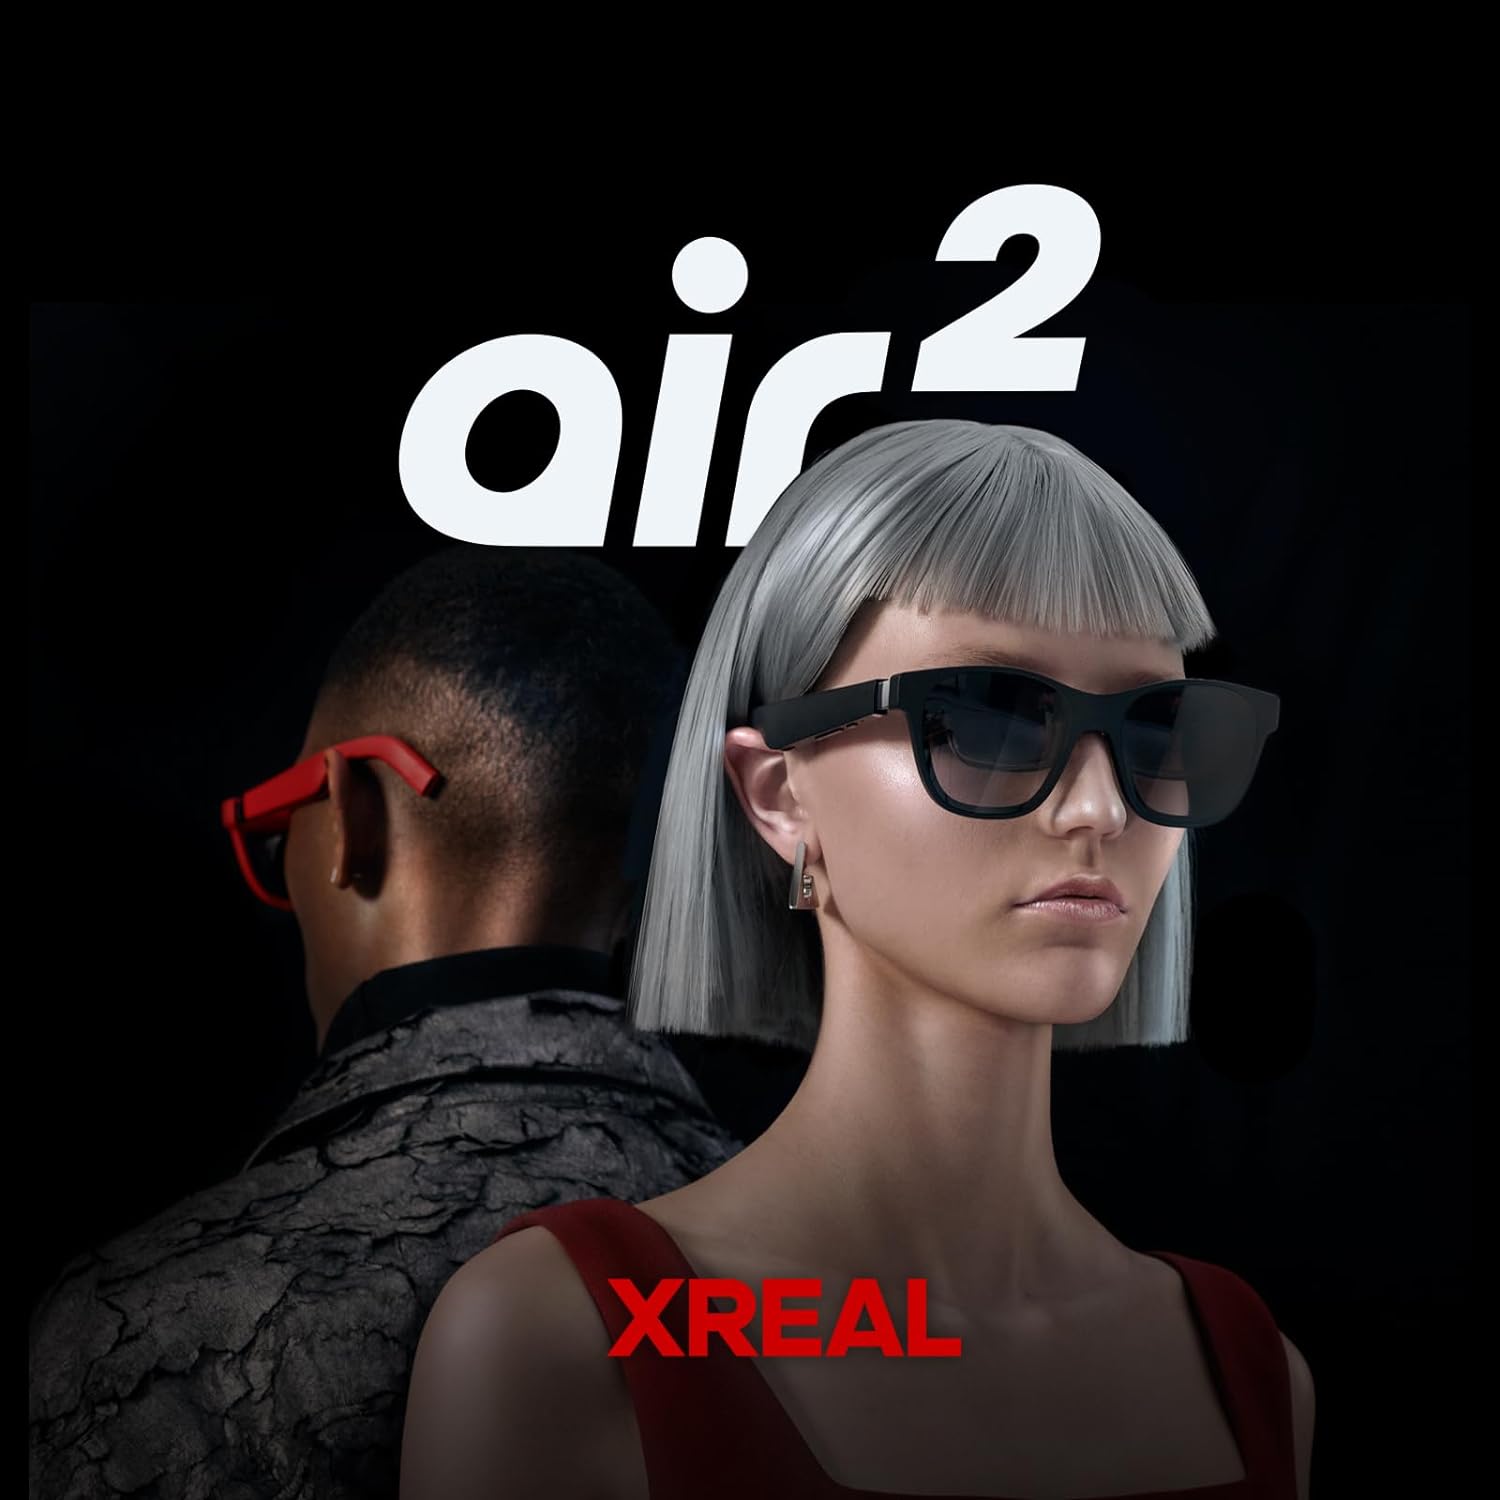 Xreal Air 2 Ar Glasses Review